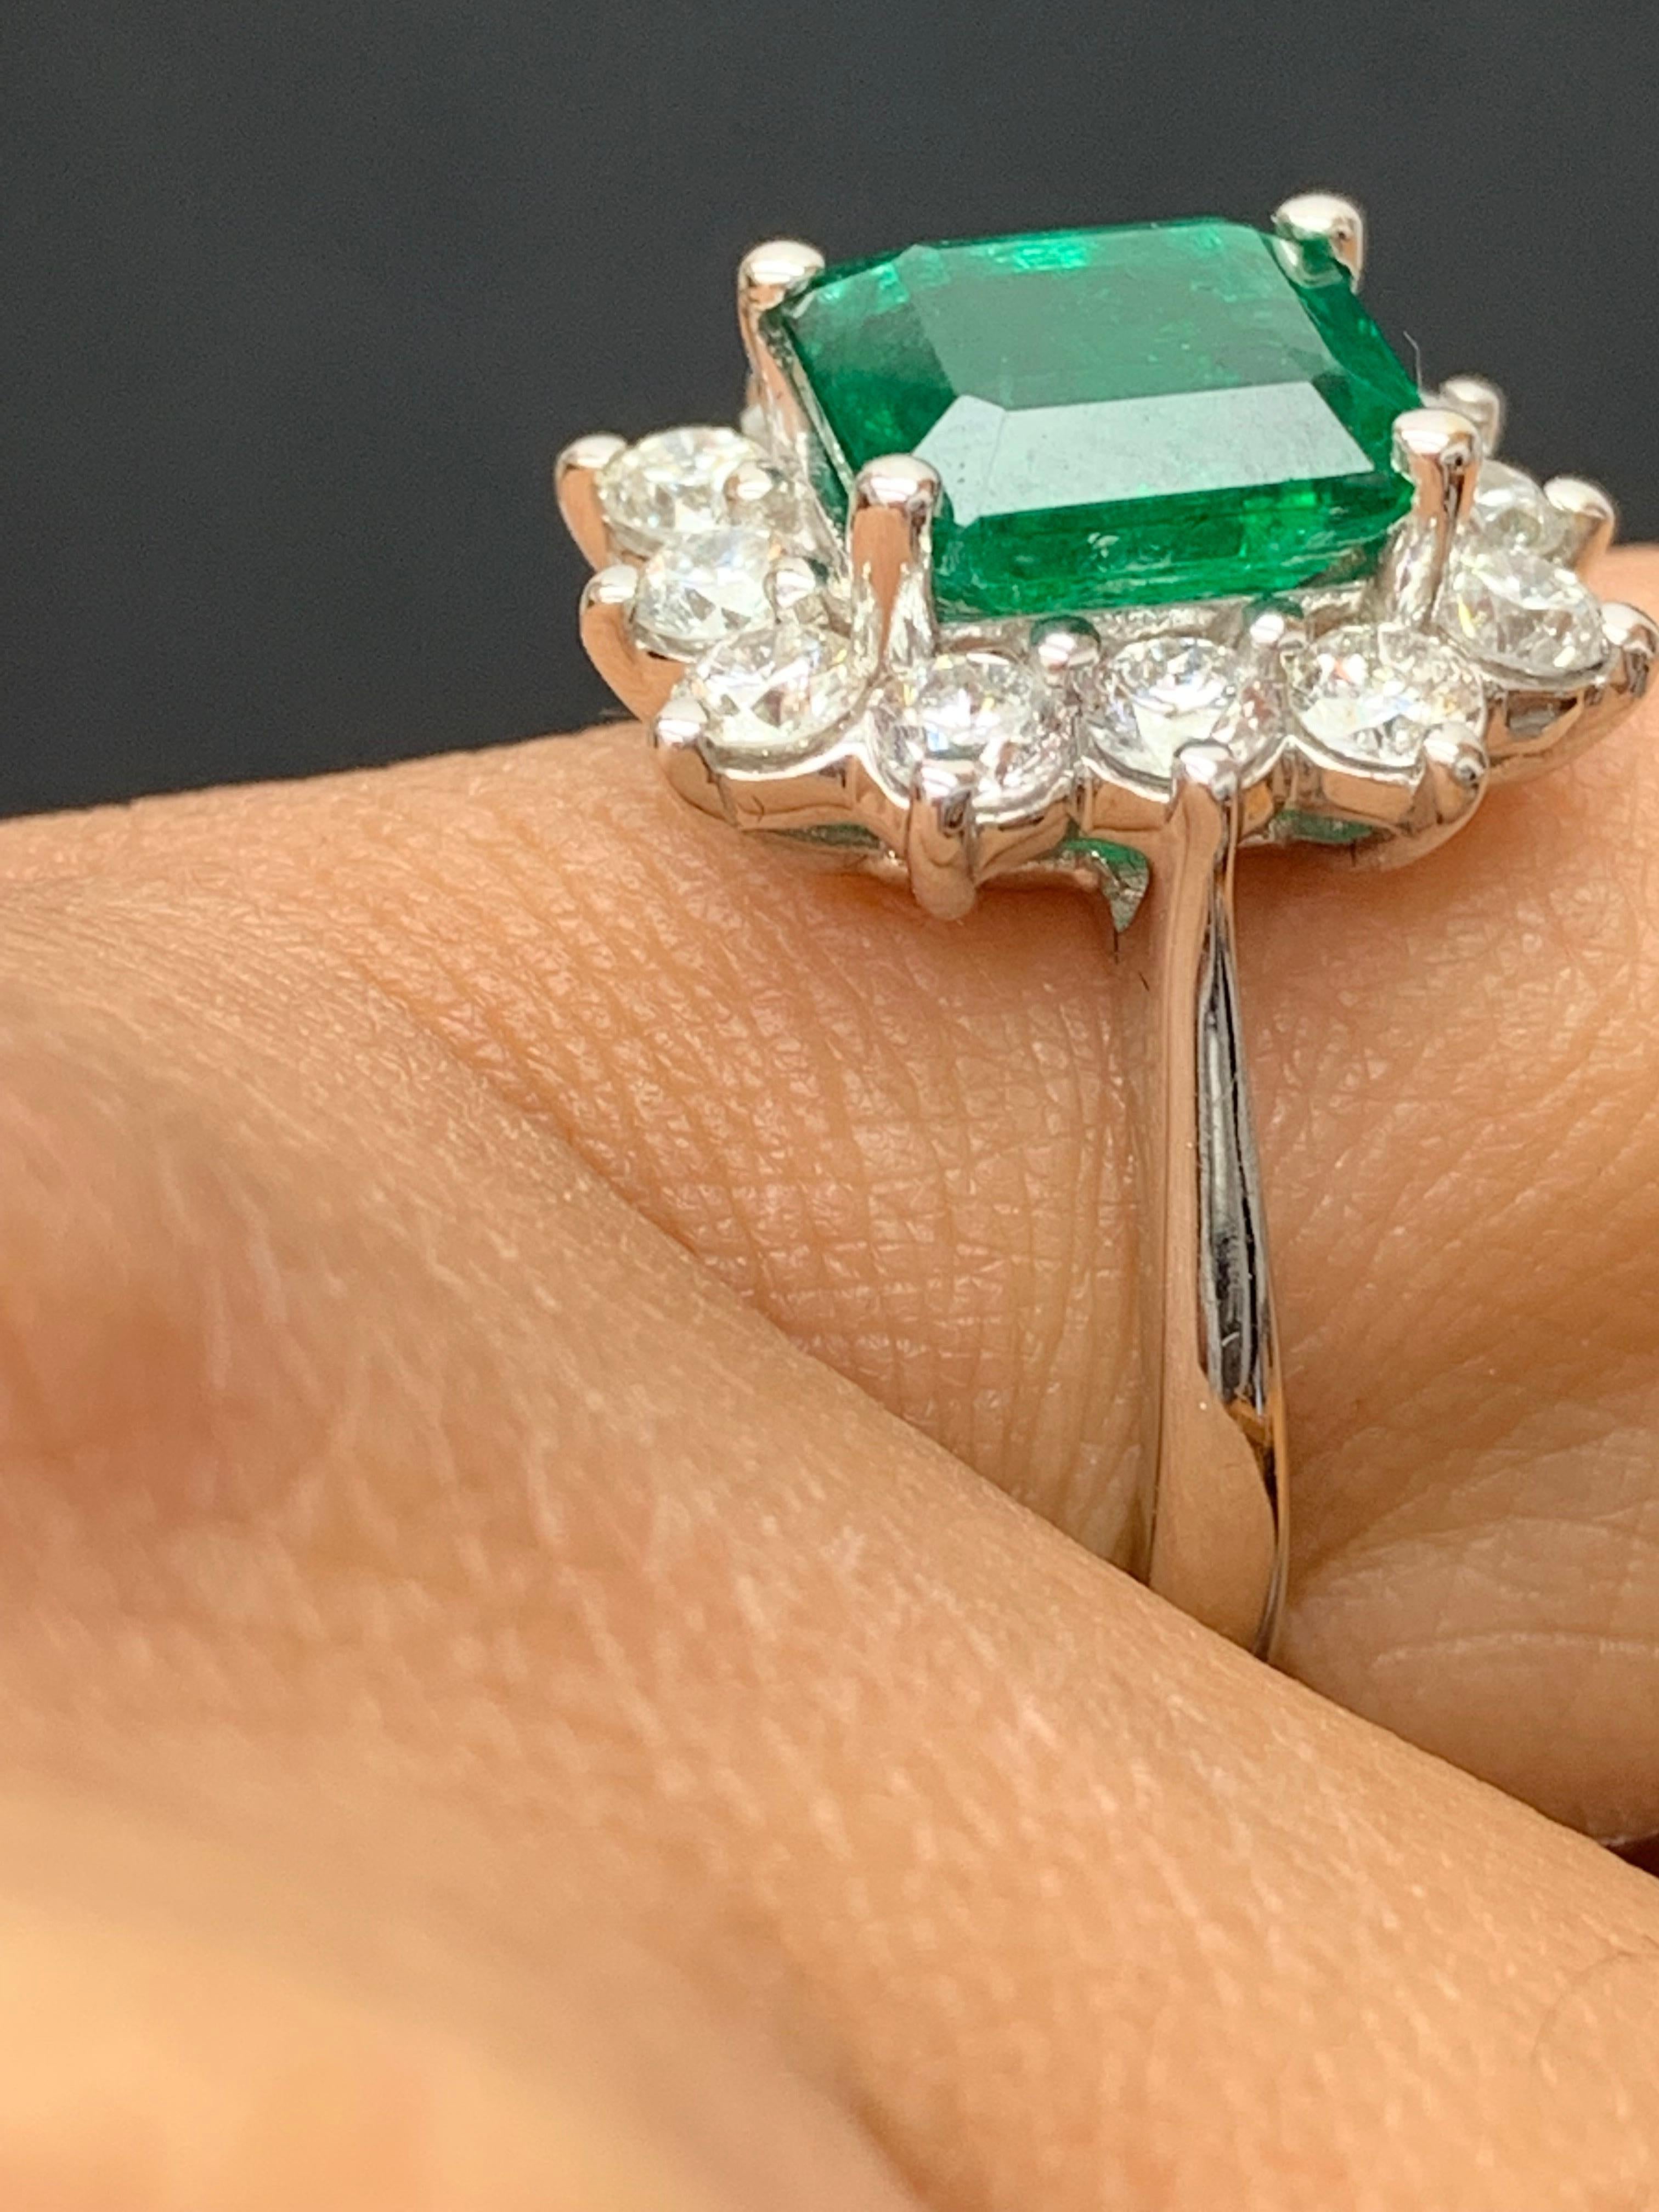 Certified 3.17 Carat Emerald Cut Emerald Diamond Ring in 14K White Gold For Sale 9